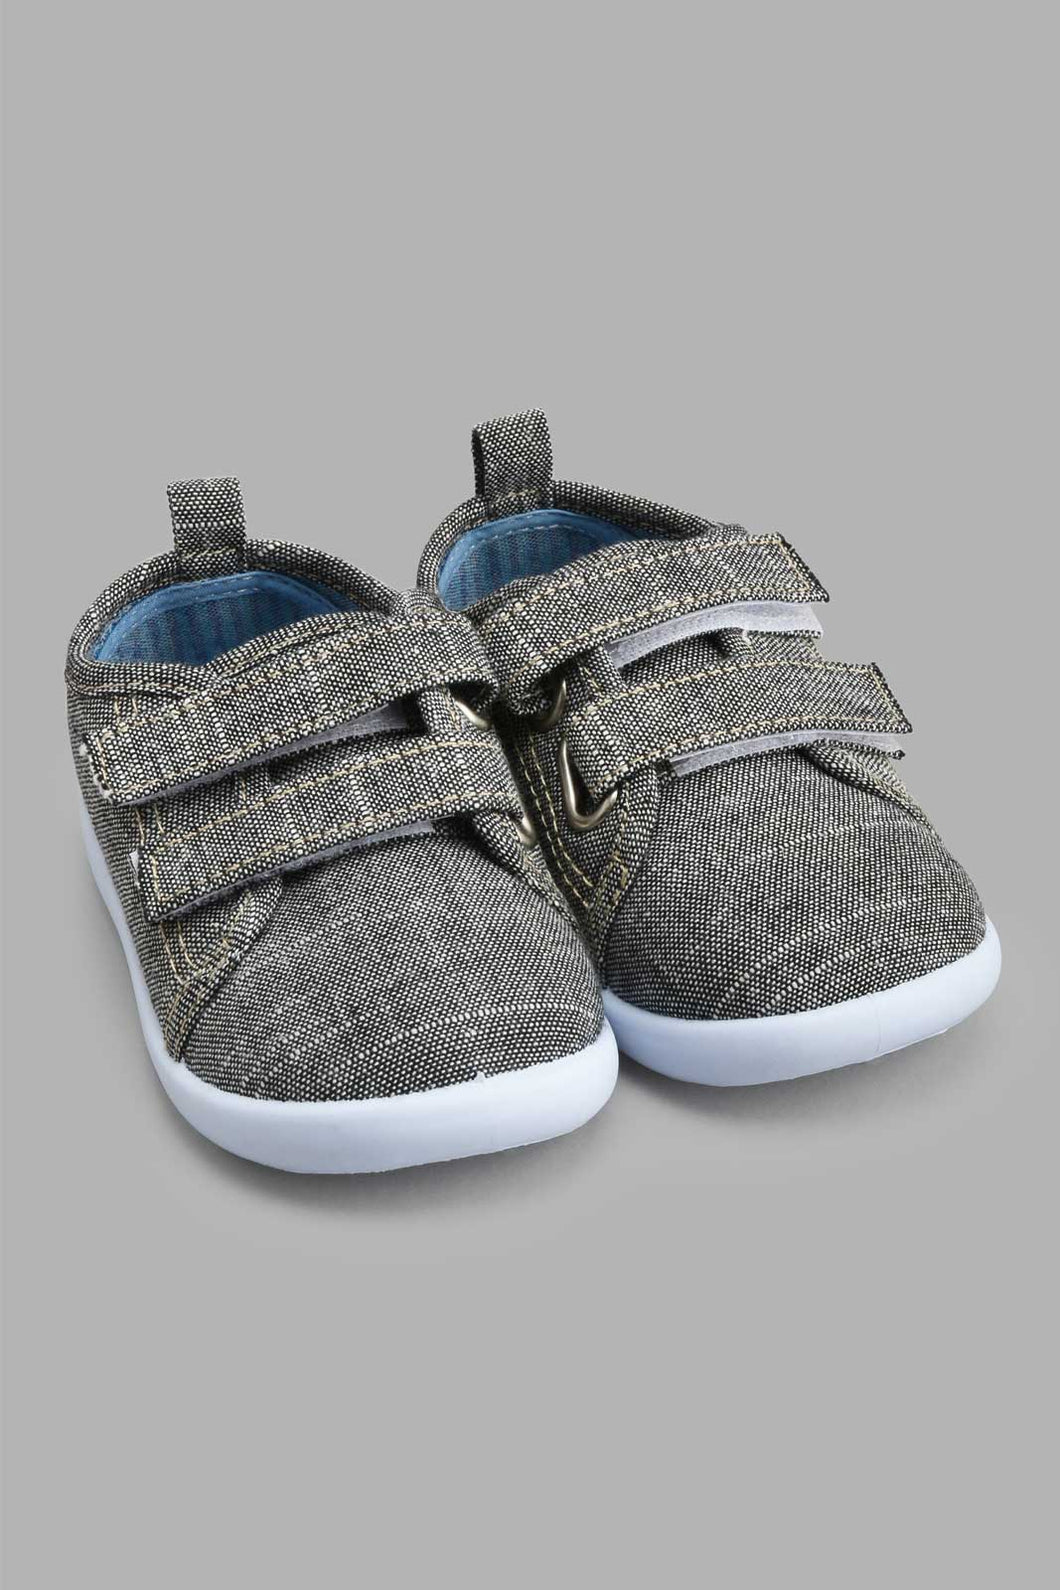 Grey Velcro Pump حذاء فيلكرو باللون الرمادي